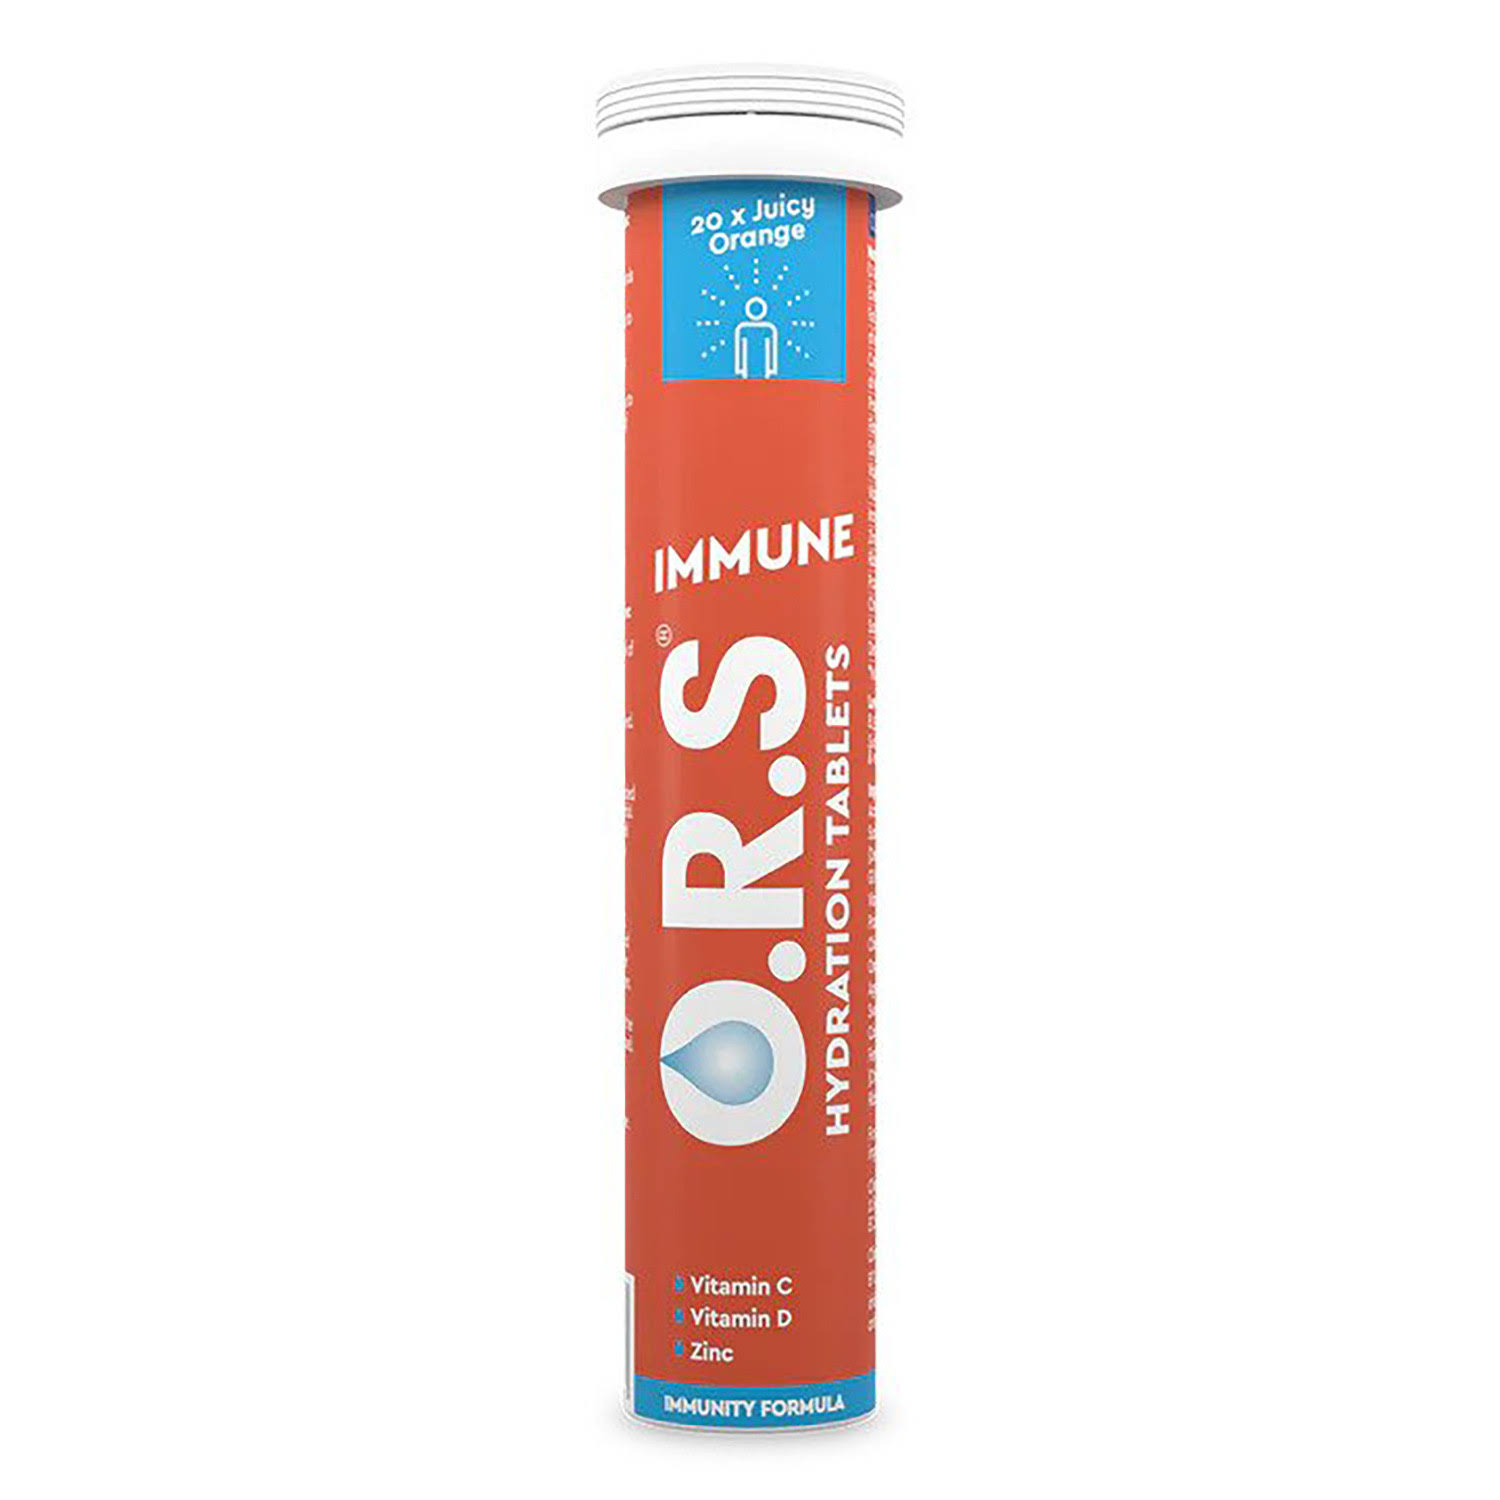 ORS Immune Orange 20 pack by dpharmacy